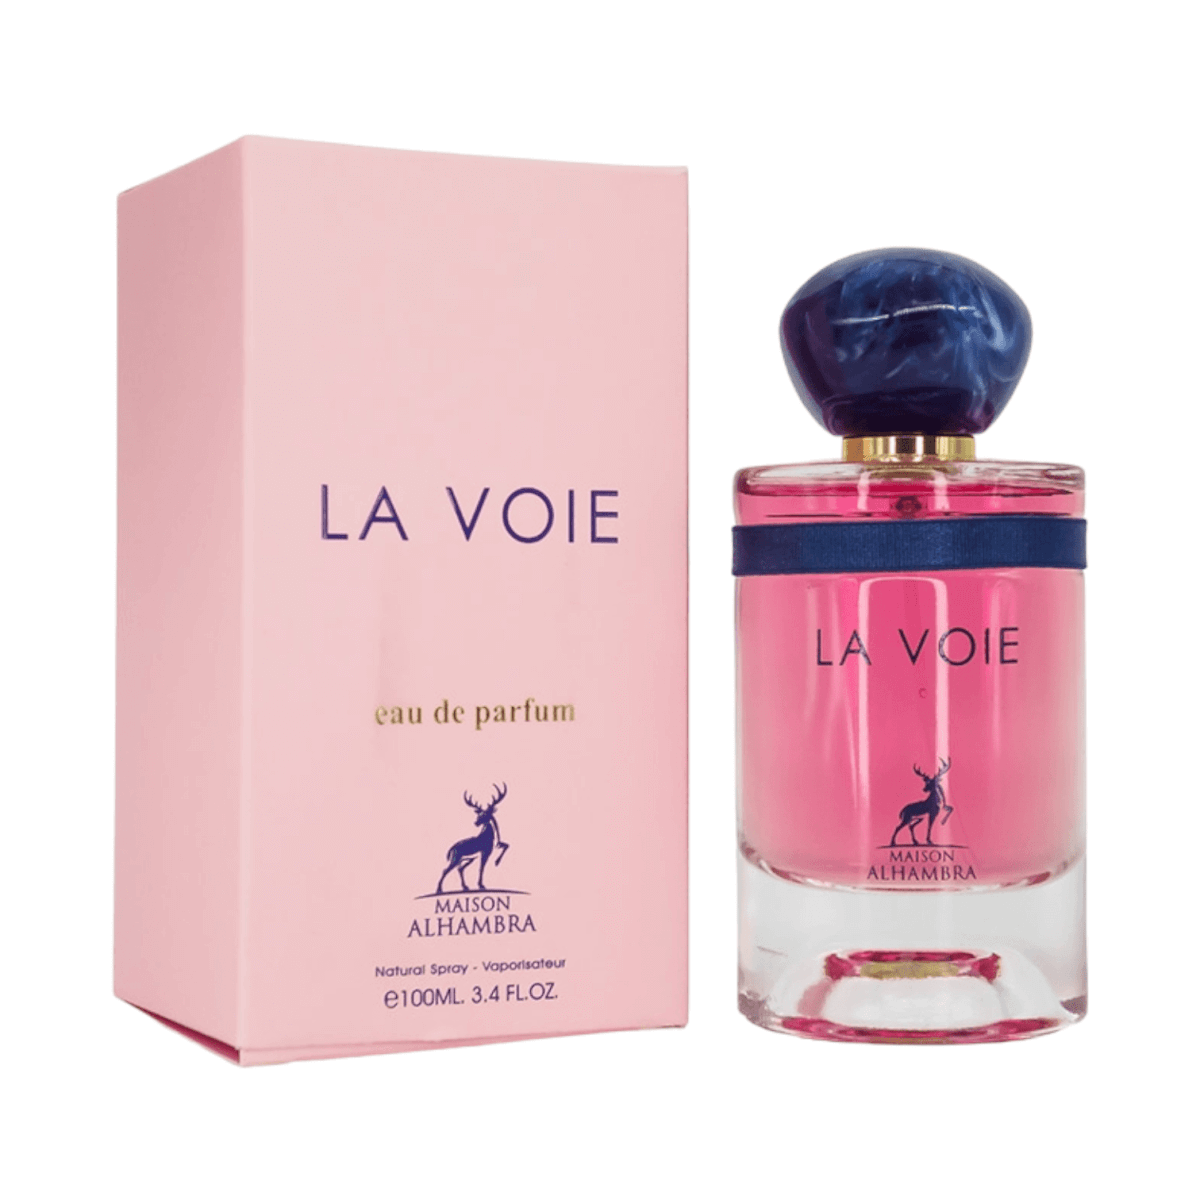 La Voie Perfume / Eau De Parfum 100Ml By Maison Alhambra / Lattafa (Inspired By Armani My Way)